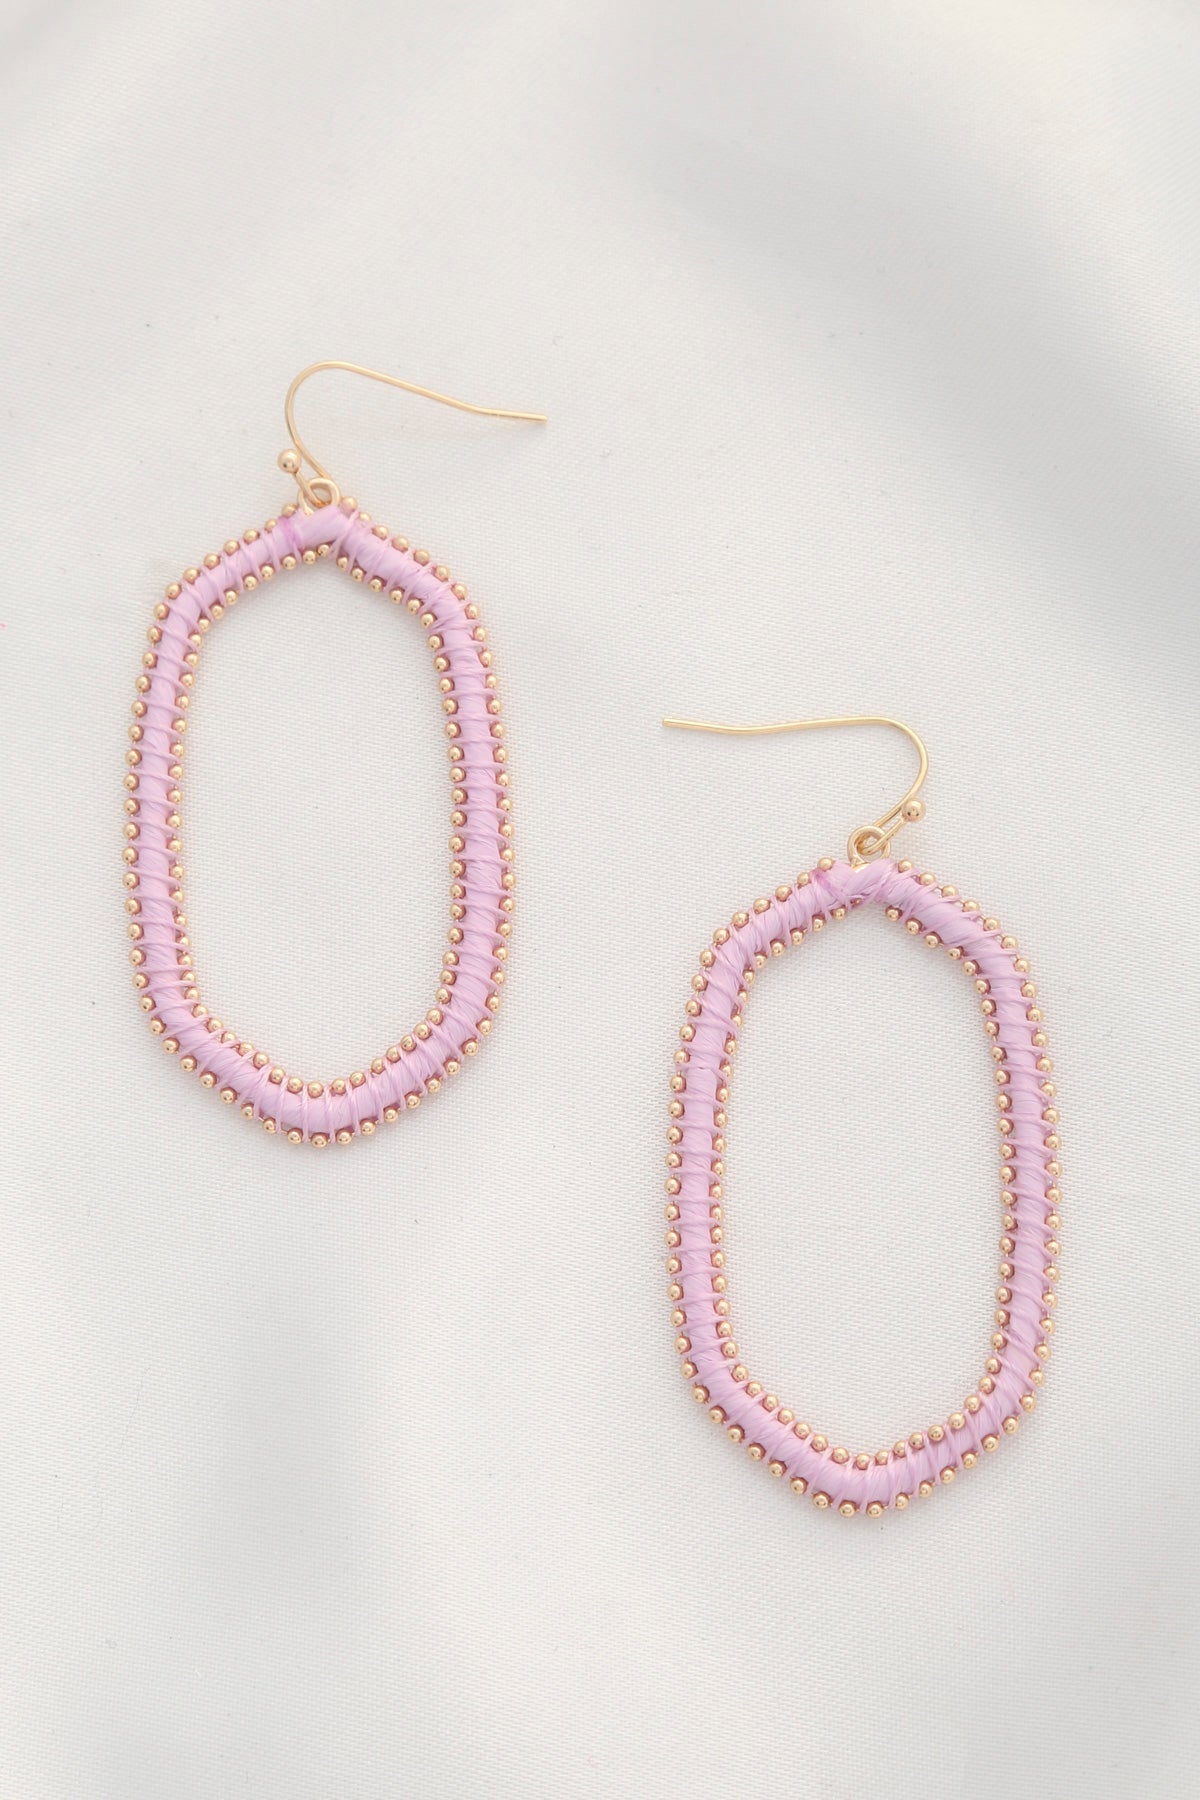 Thread Wrapped Geometric Dangle Earring in Lavender